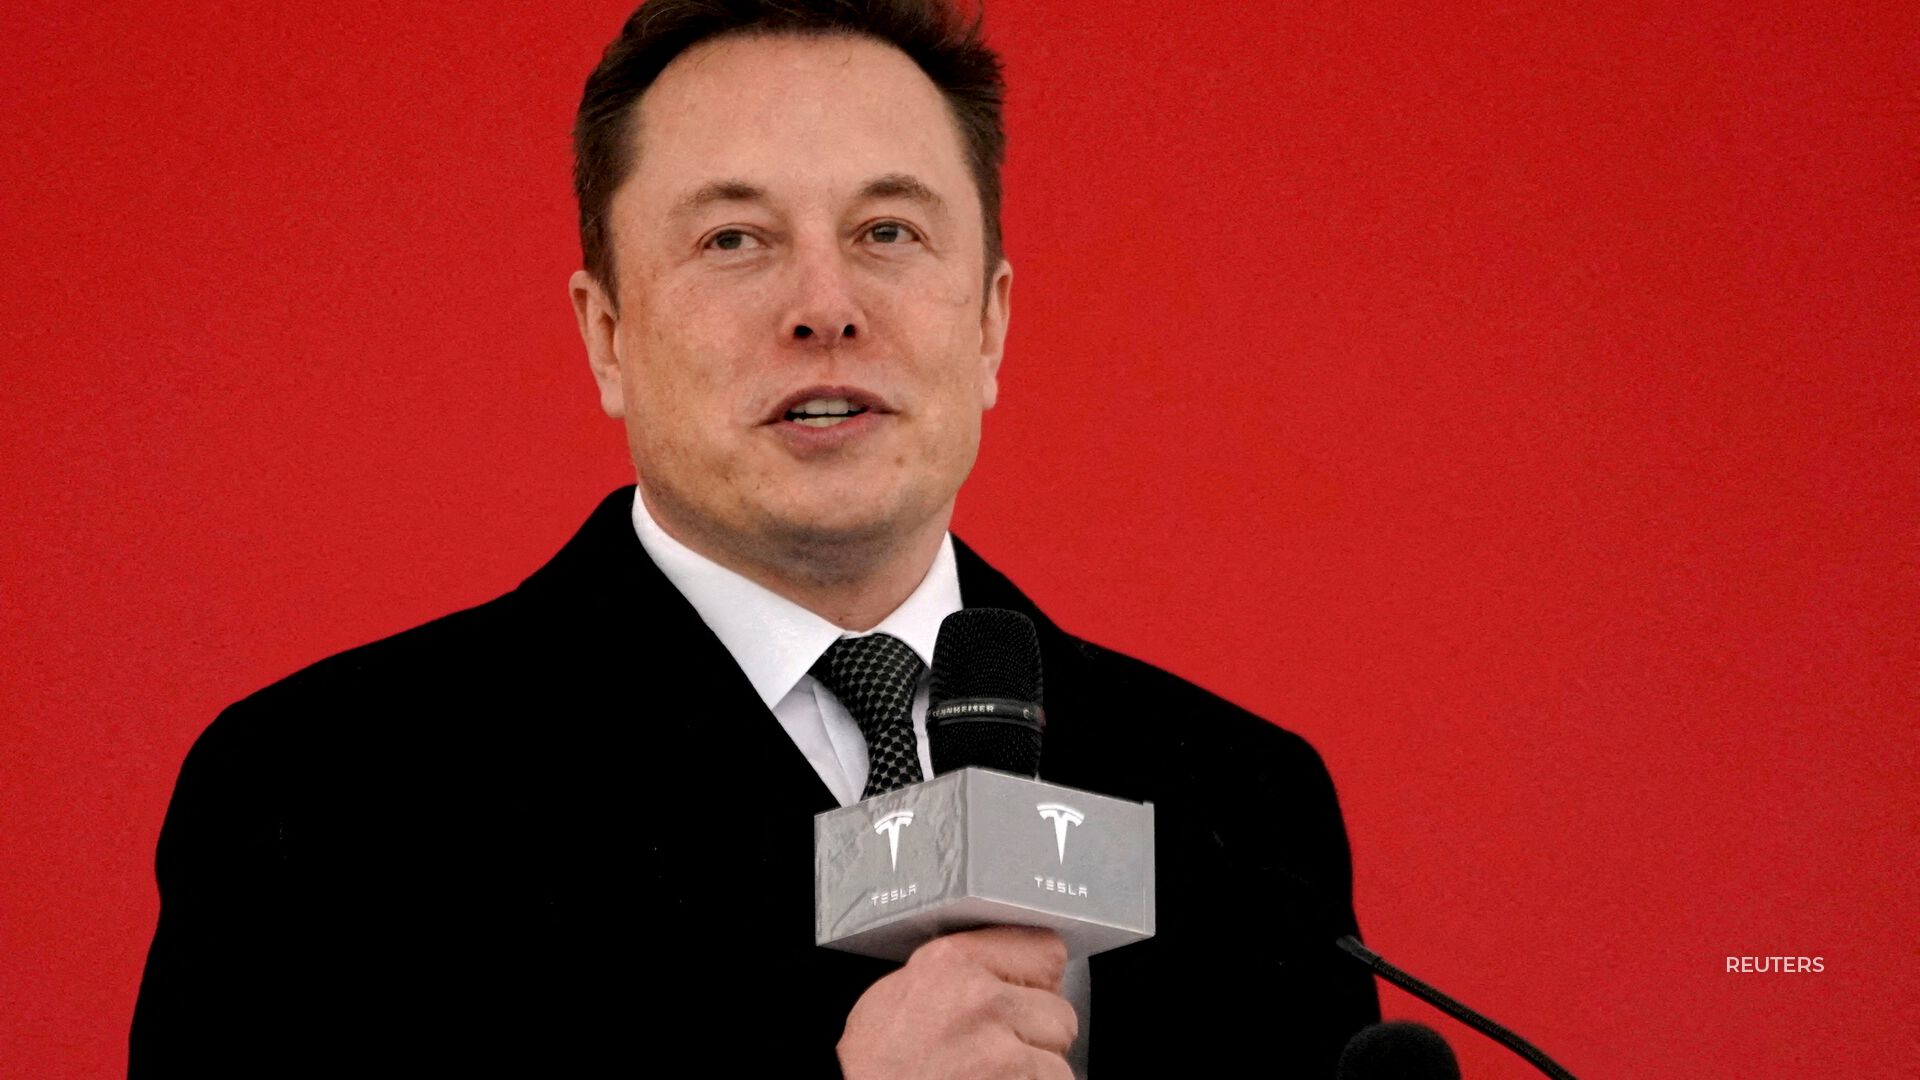 Elon Musk addressed the Tesla job cuts plan.